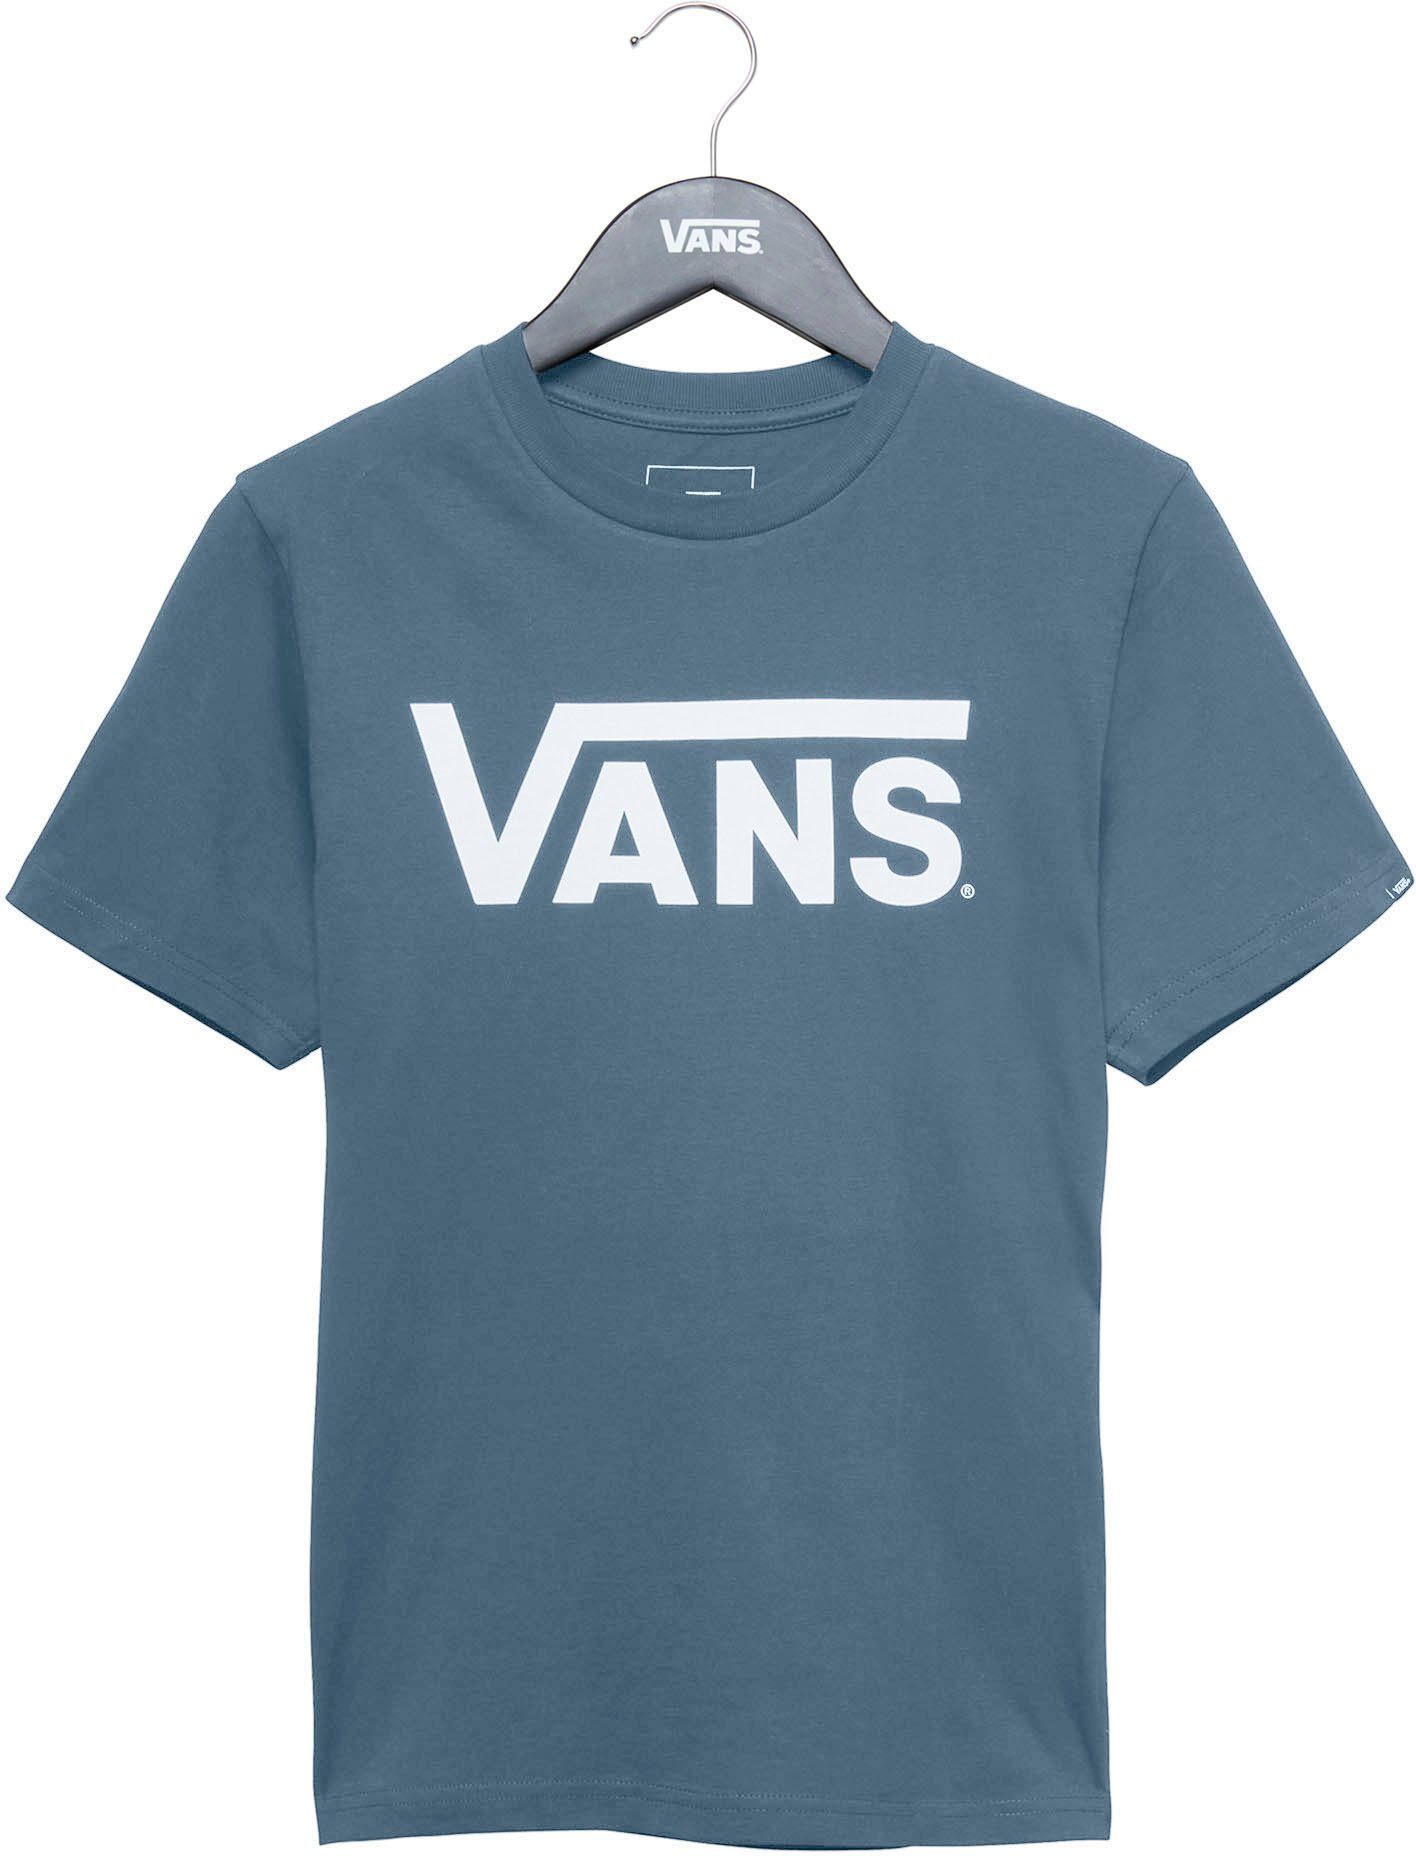 Vans T-Shirt VANS CLASSIC KIDS blau | Sport-T-Shirts